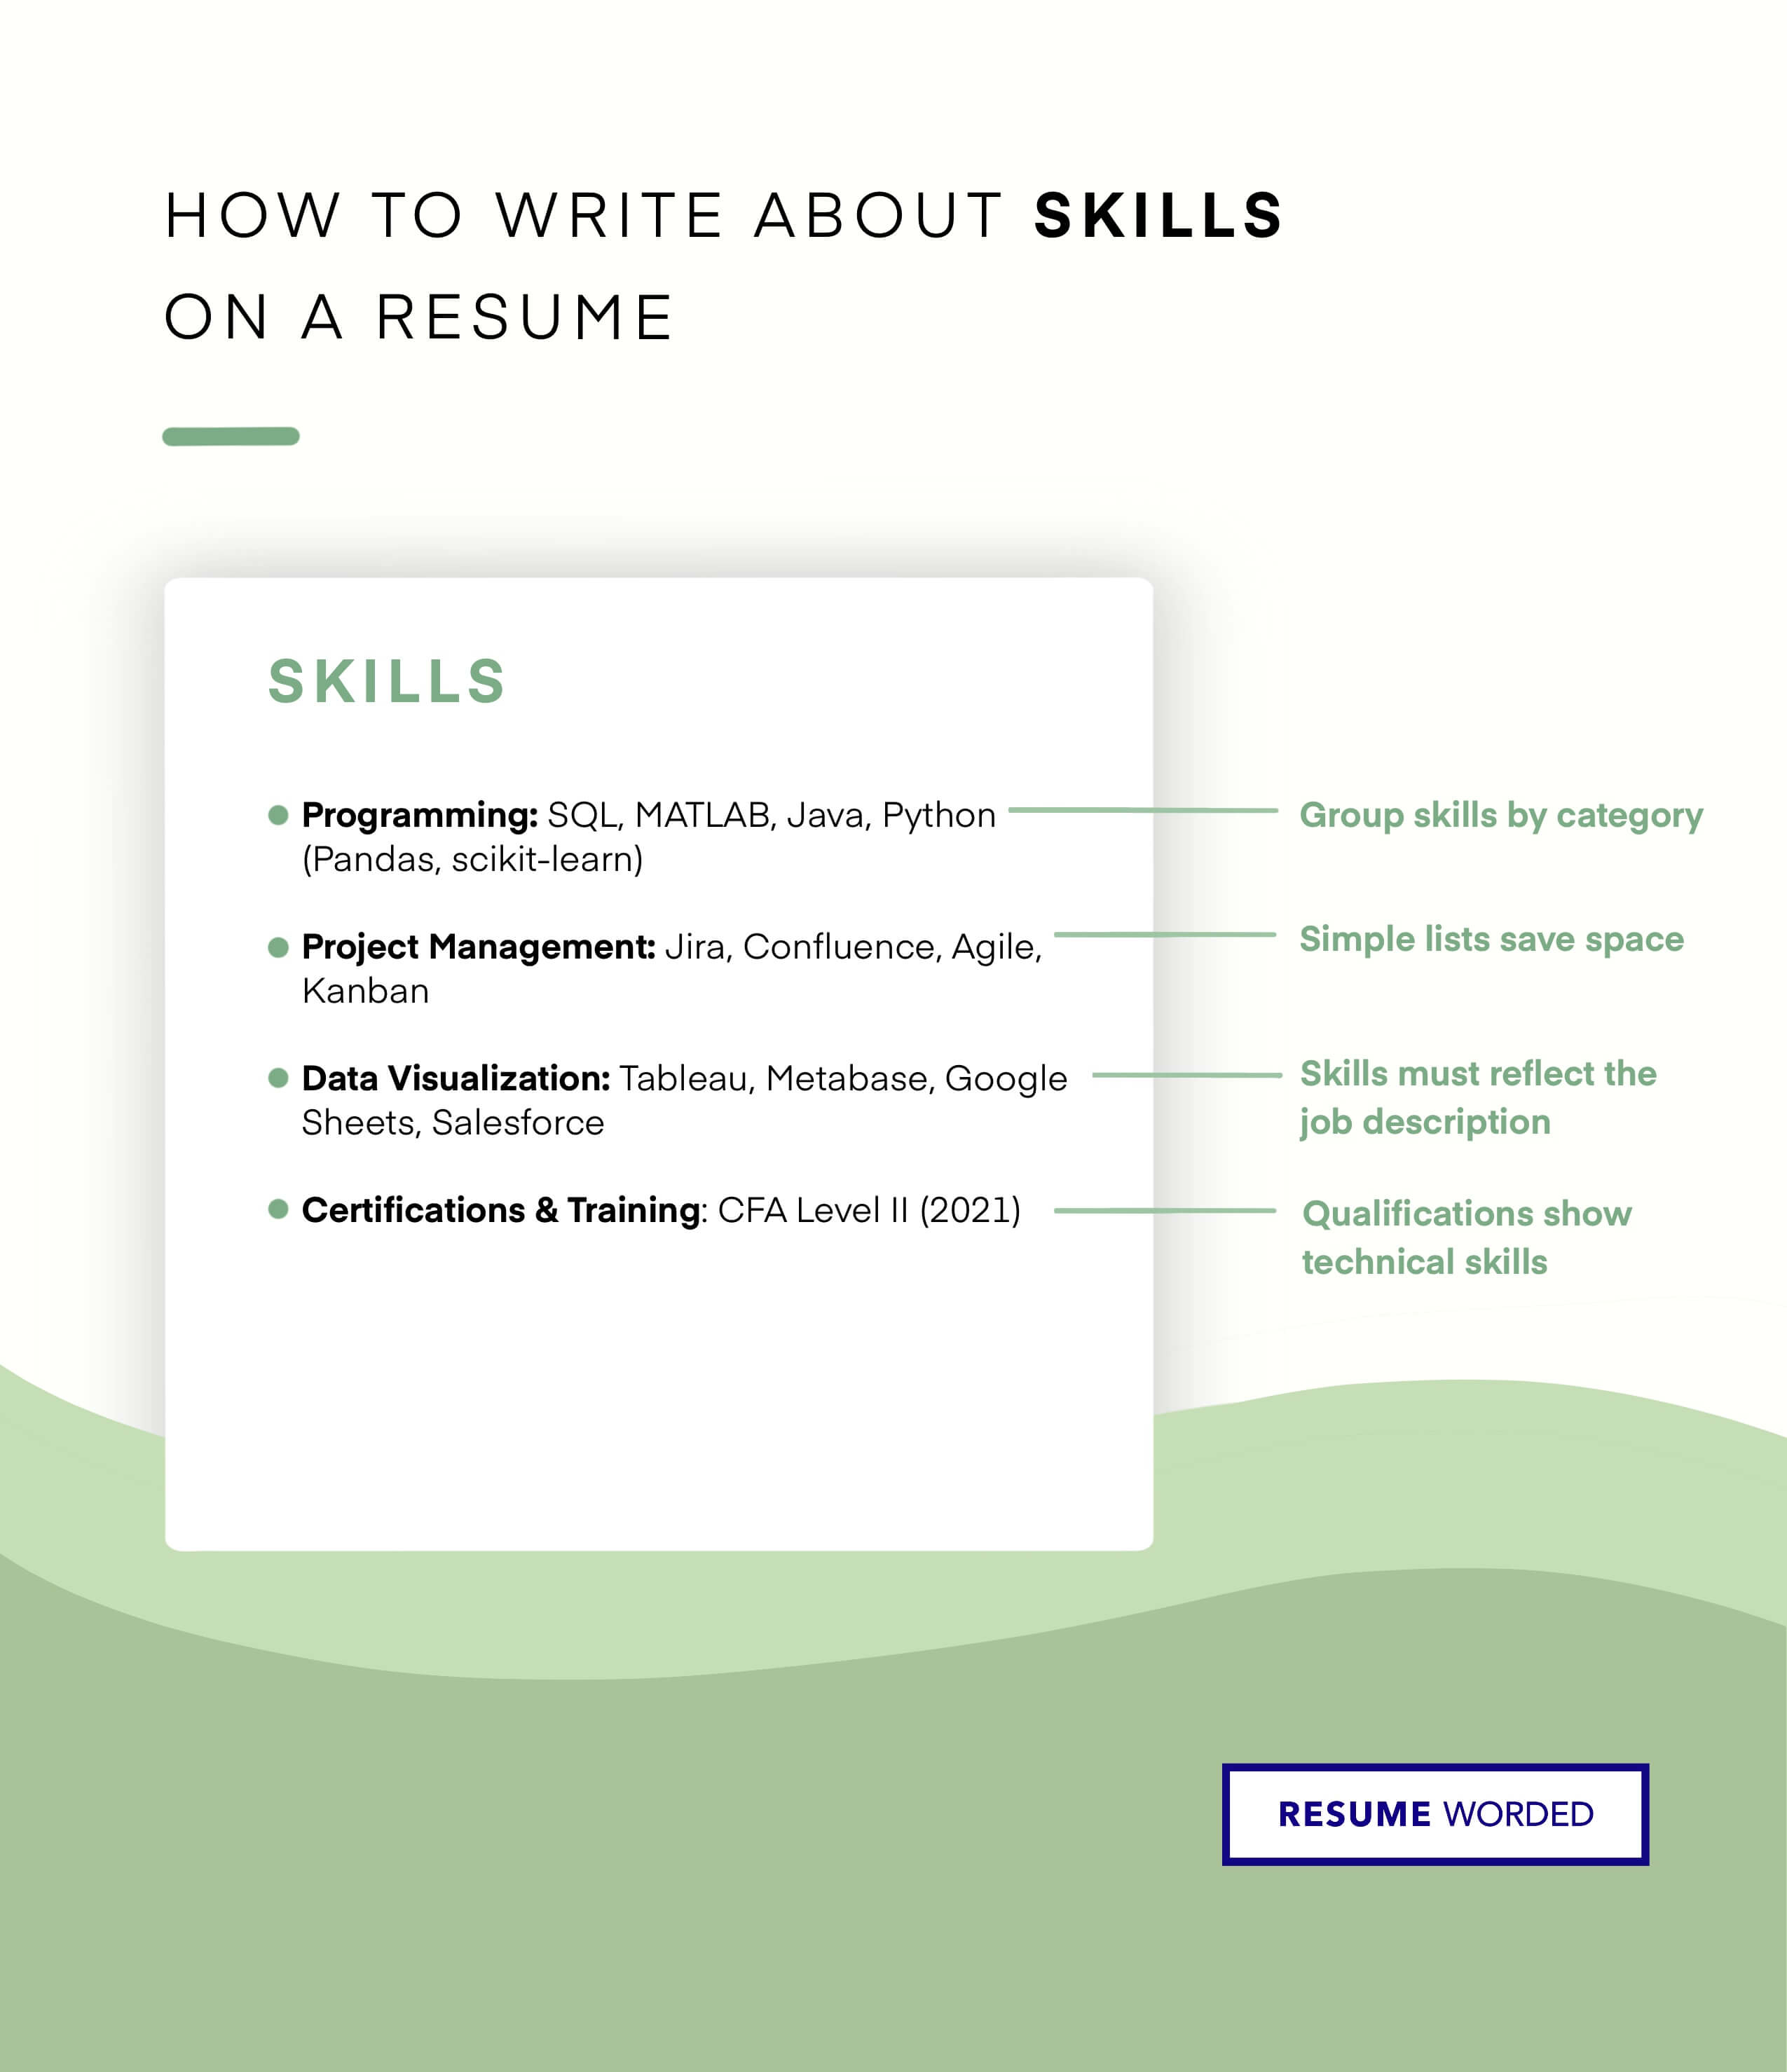 Demonstrate your people skills - Entry Level Brand Ambassador CV